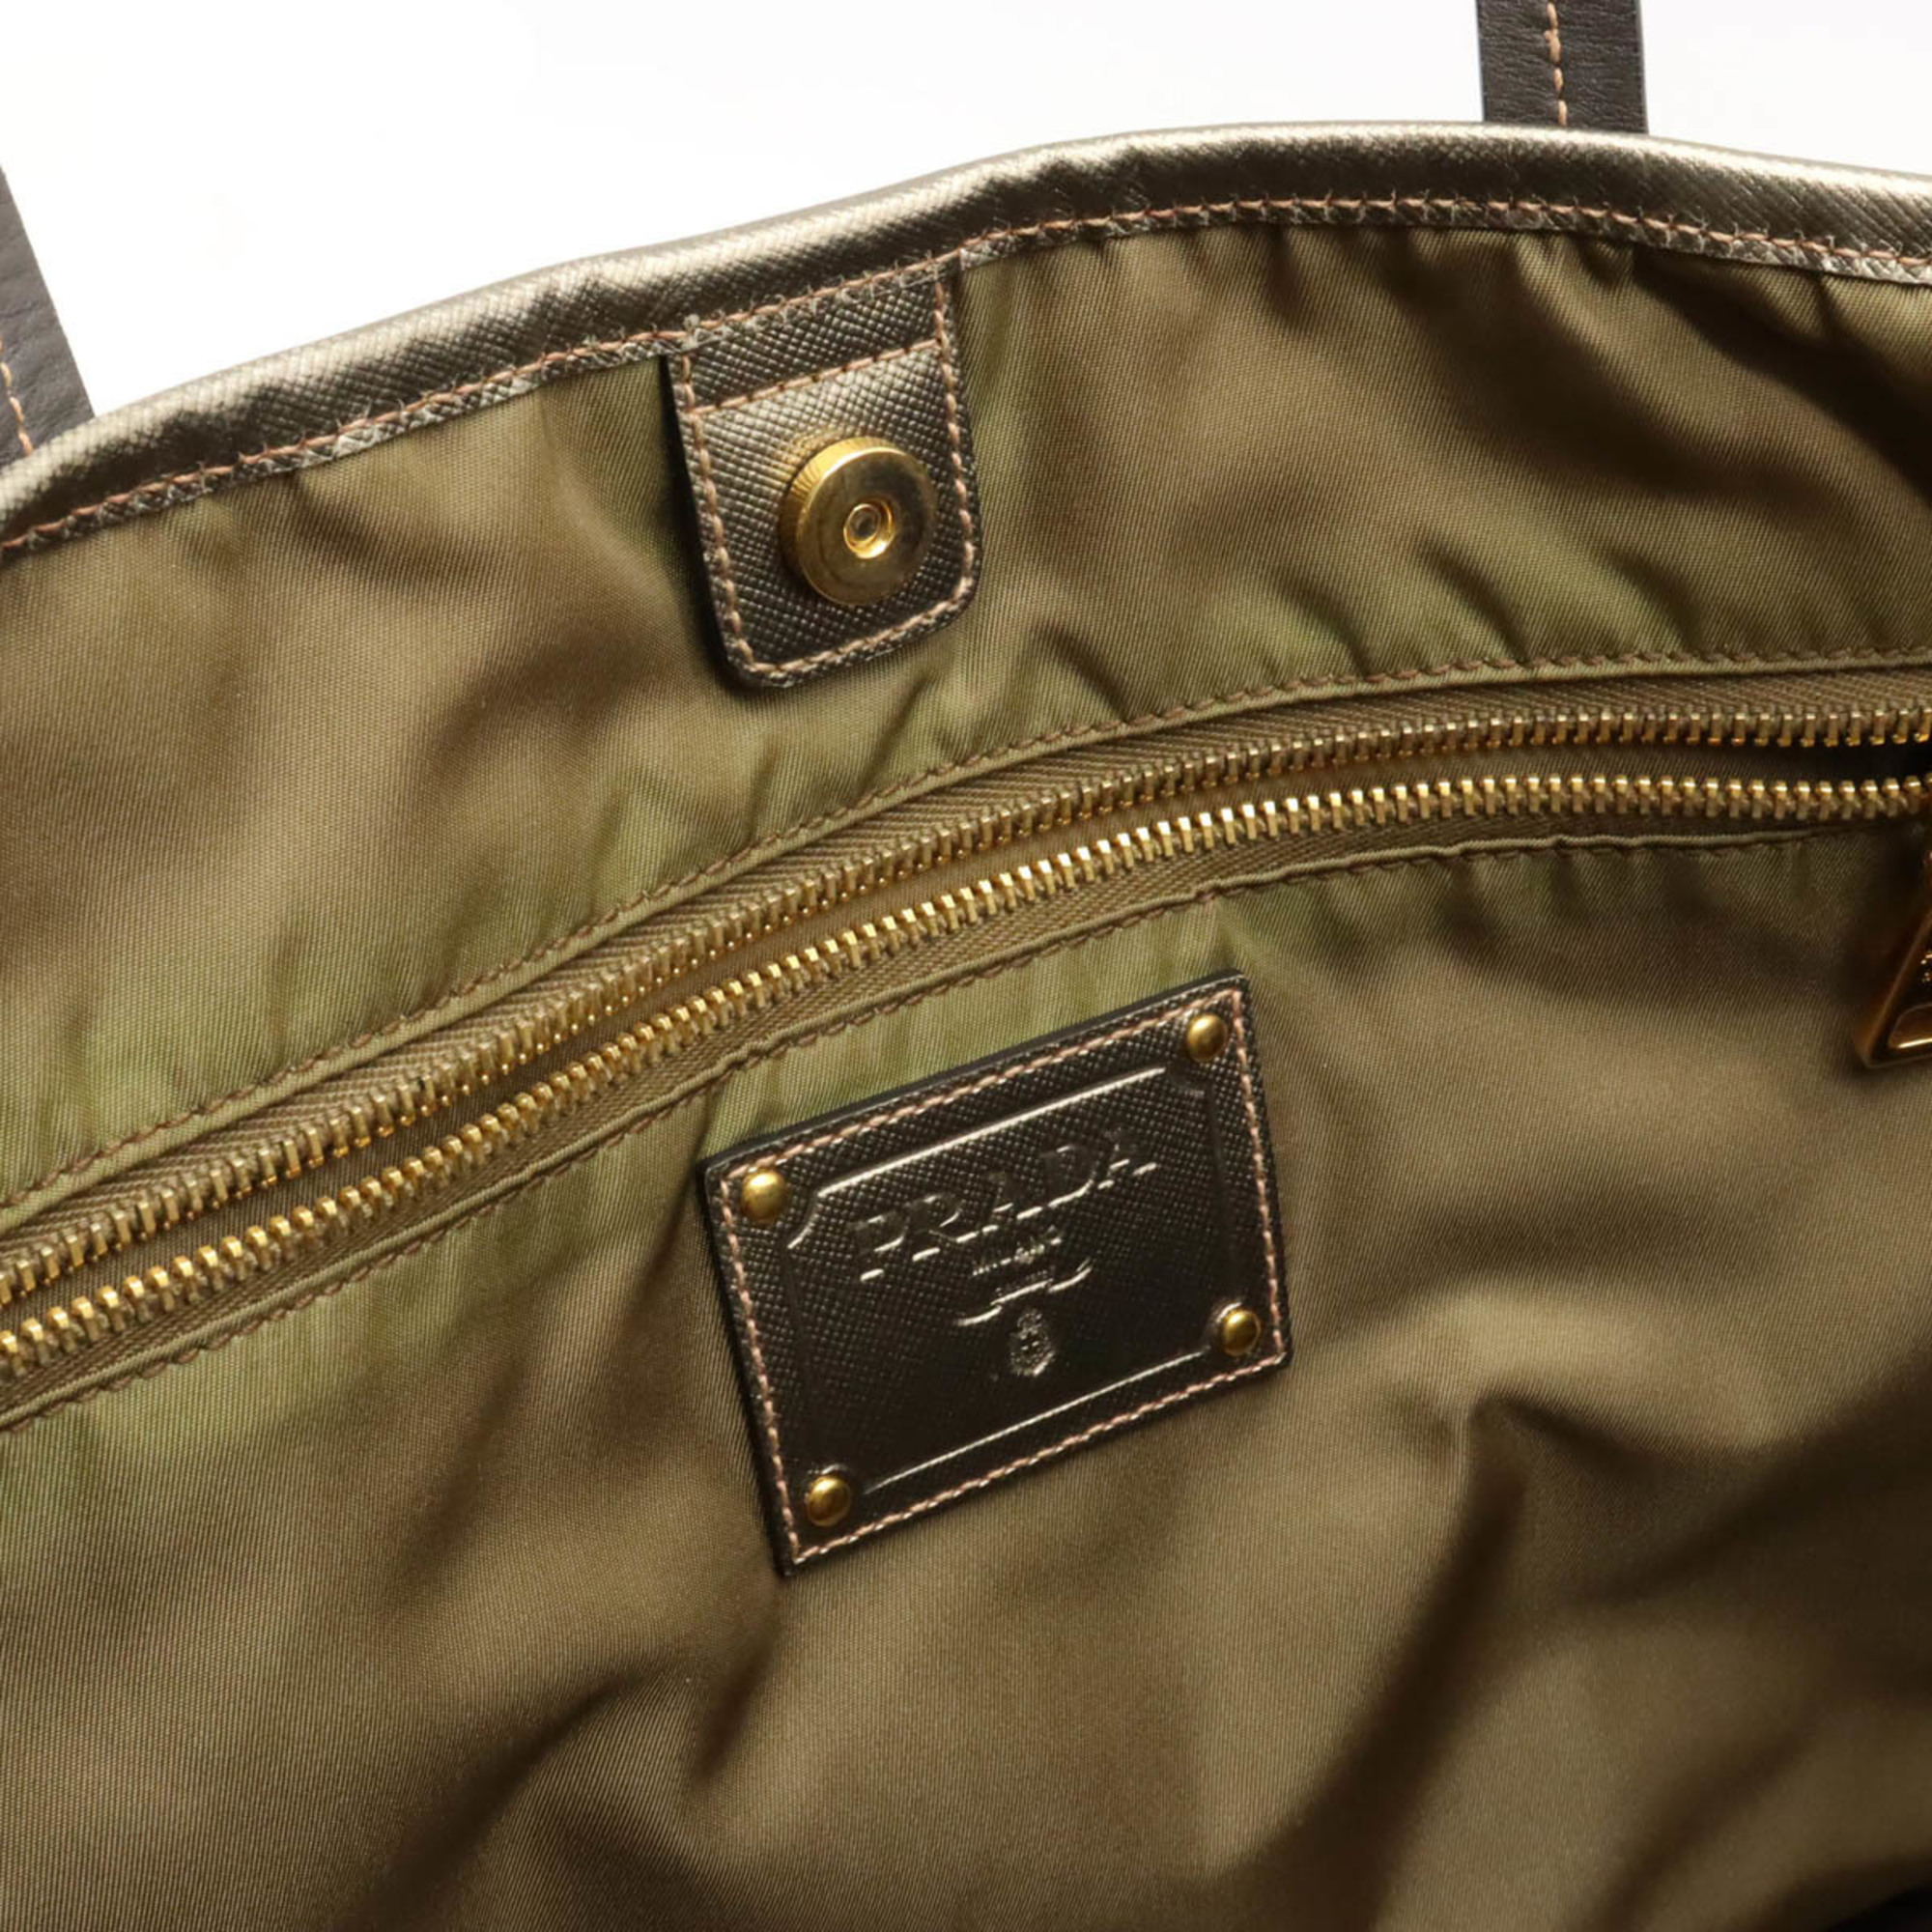 PRADA Prada Tote Bag Shoulder Nylon Metallic Leather FUMO MORDORE Khaki BR4001